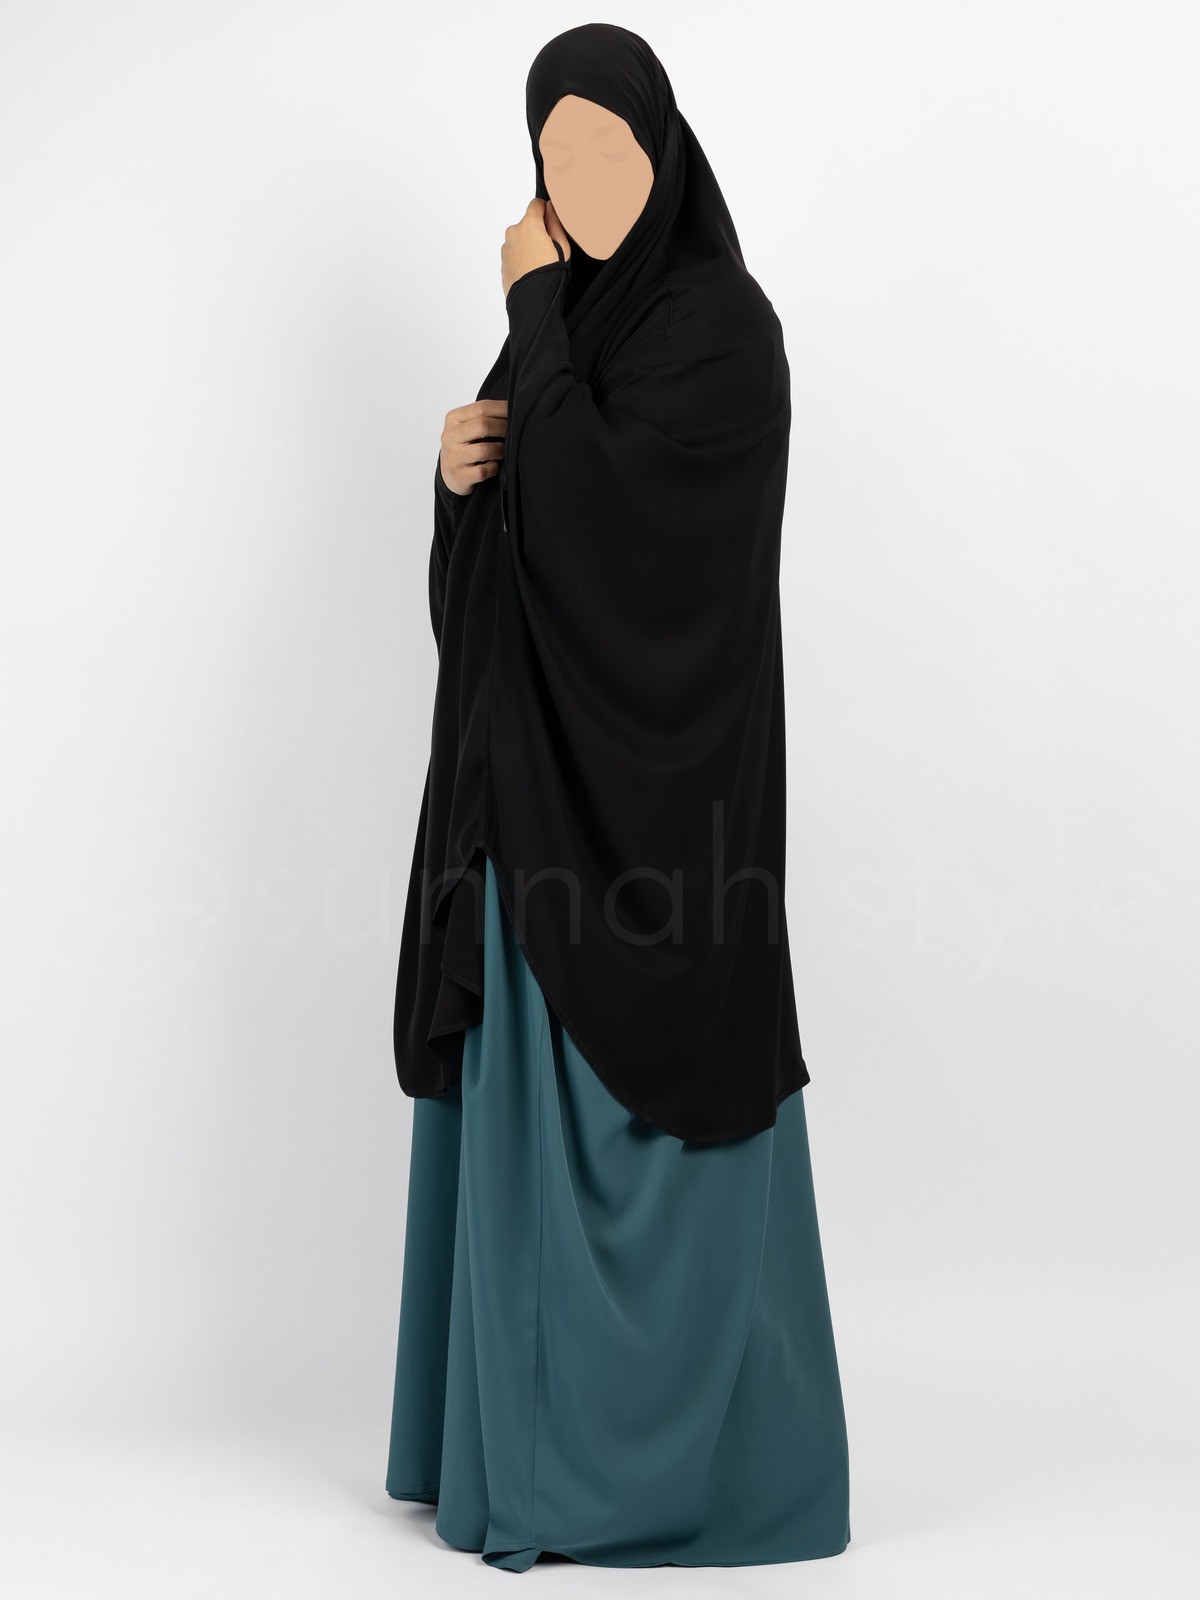 Sunnah Style - Signature Jilbab Top - Knee Length (Black)